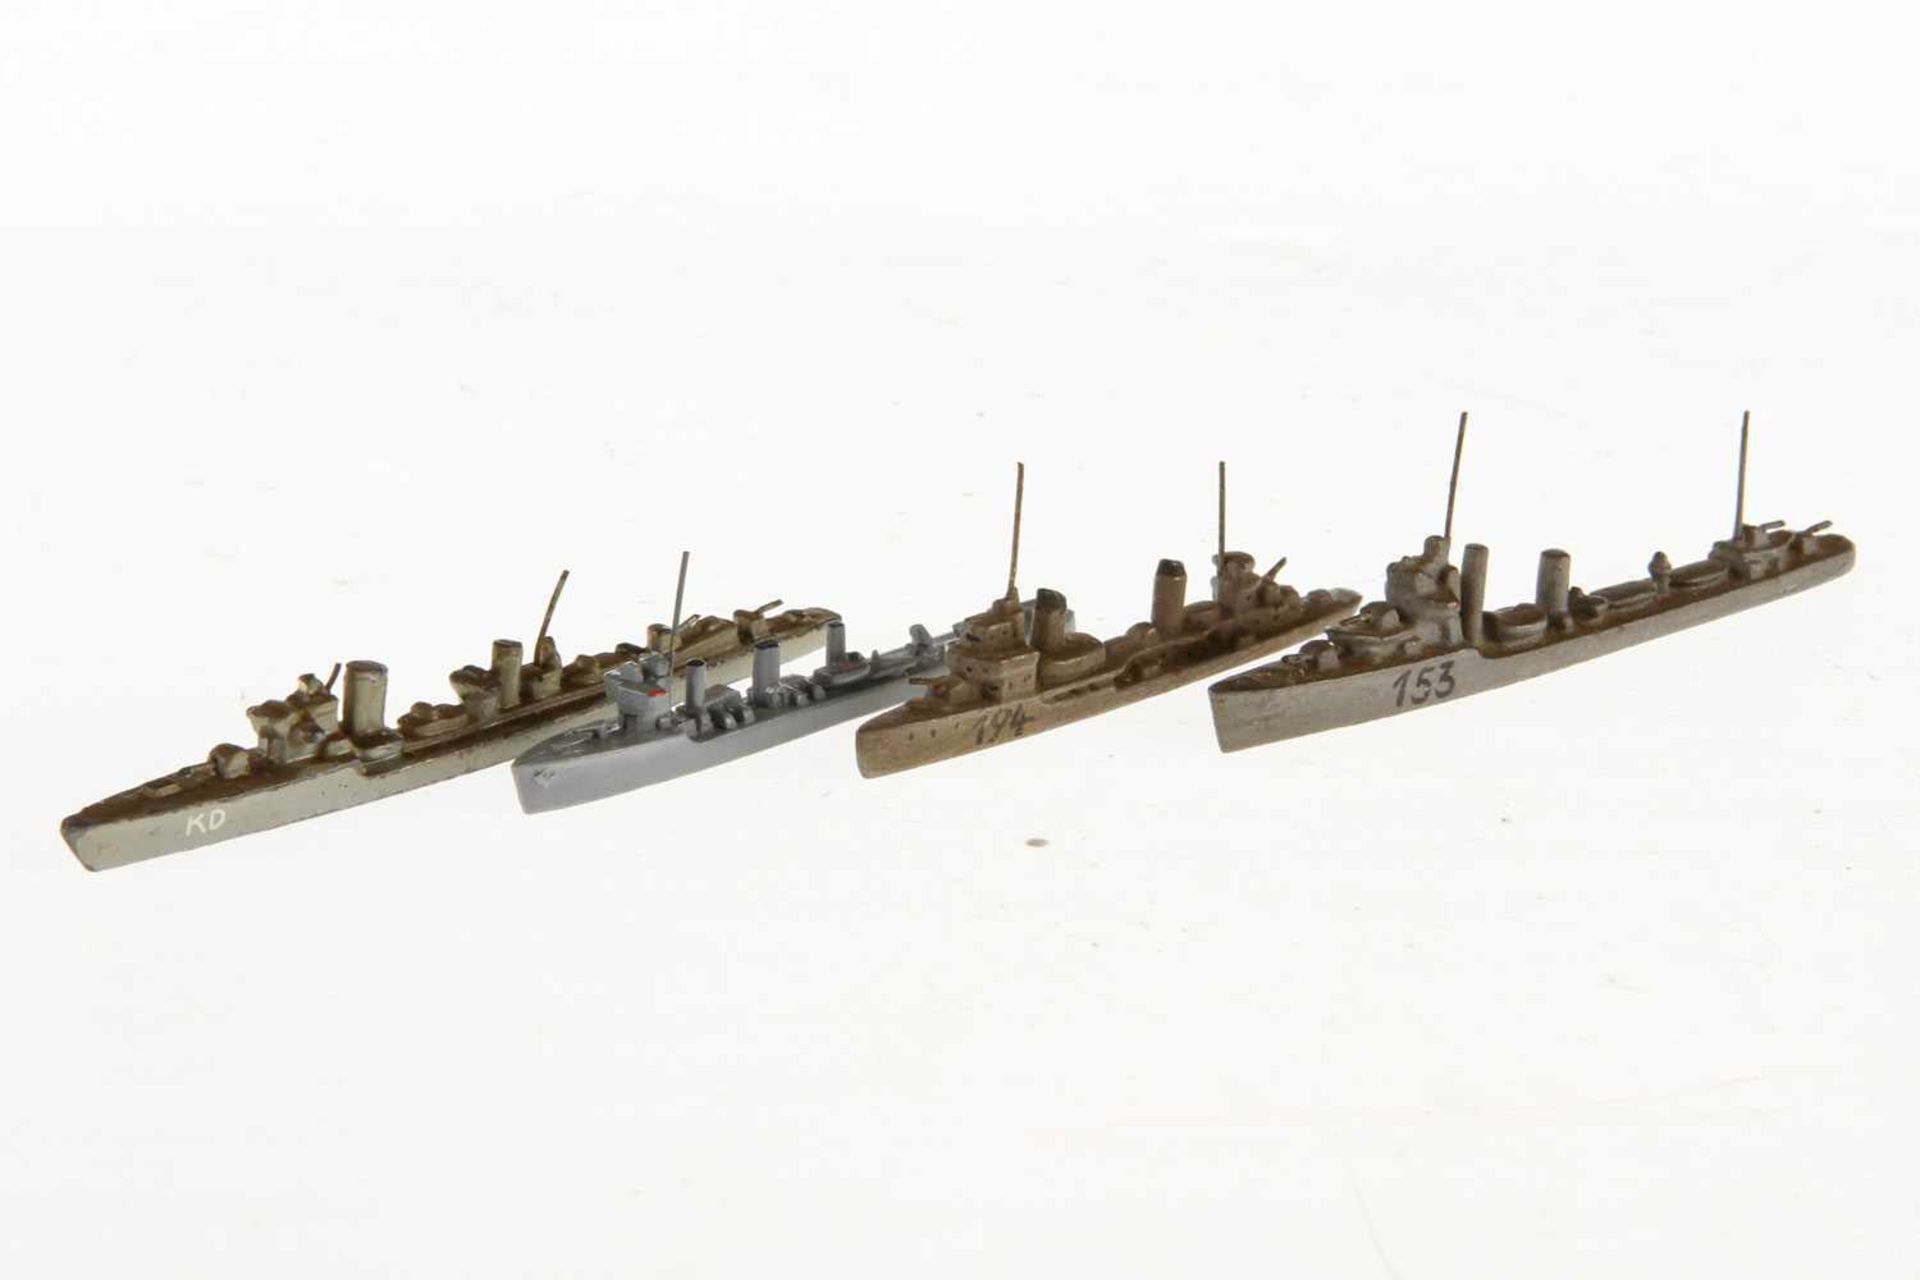 Konv. 4 Wiking Modellschiffe, Guss/Kunststoff: Zerstörer "V/W Kl. 153", Torpedoboot "Raubtier